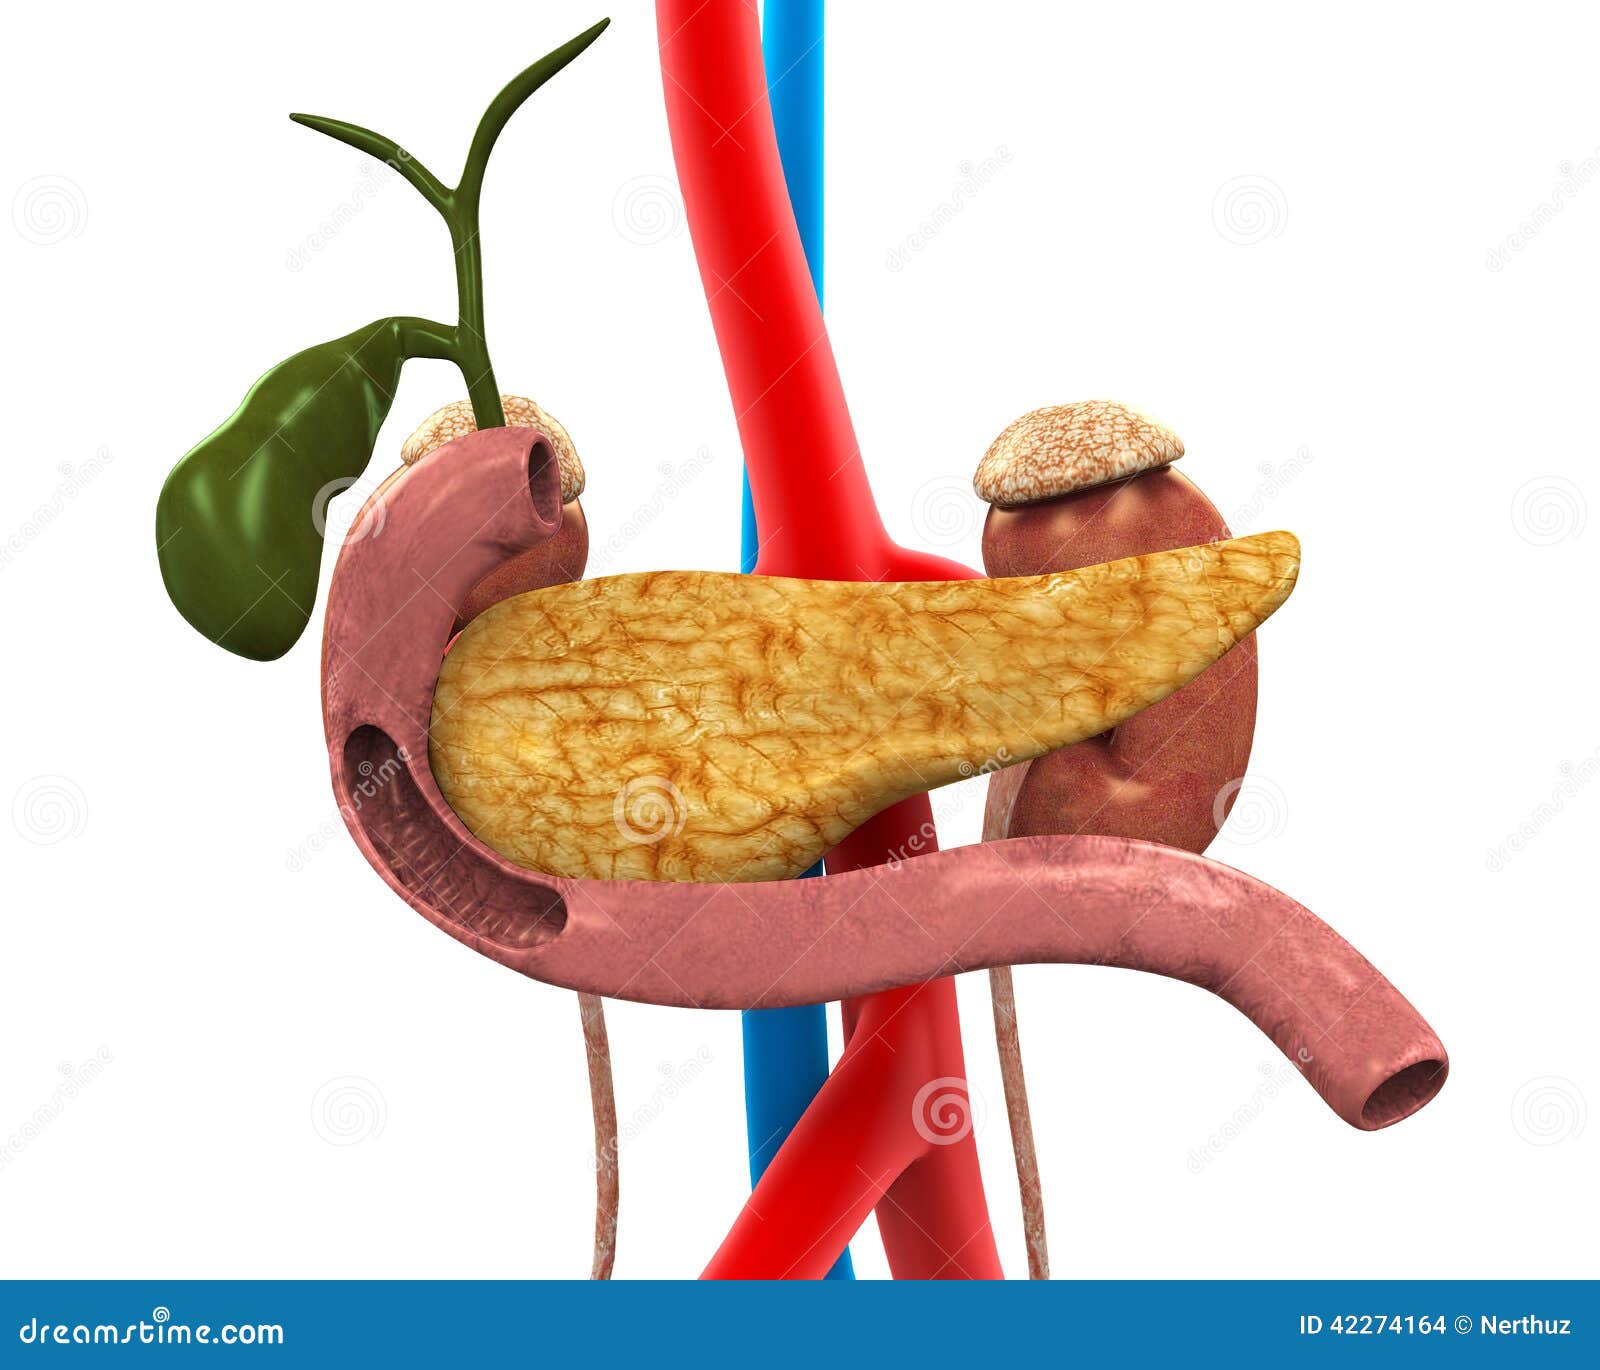 Pancreas, Gallbladder And Duodenum Anatomy Stock Illustration - Image